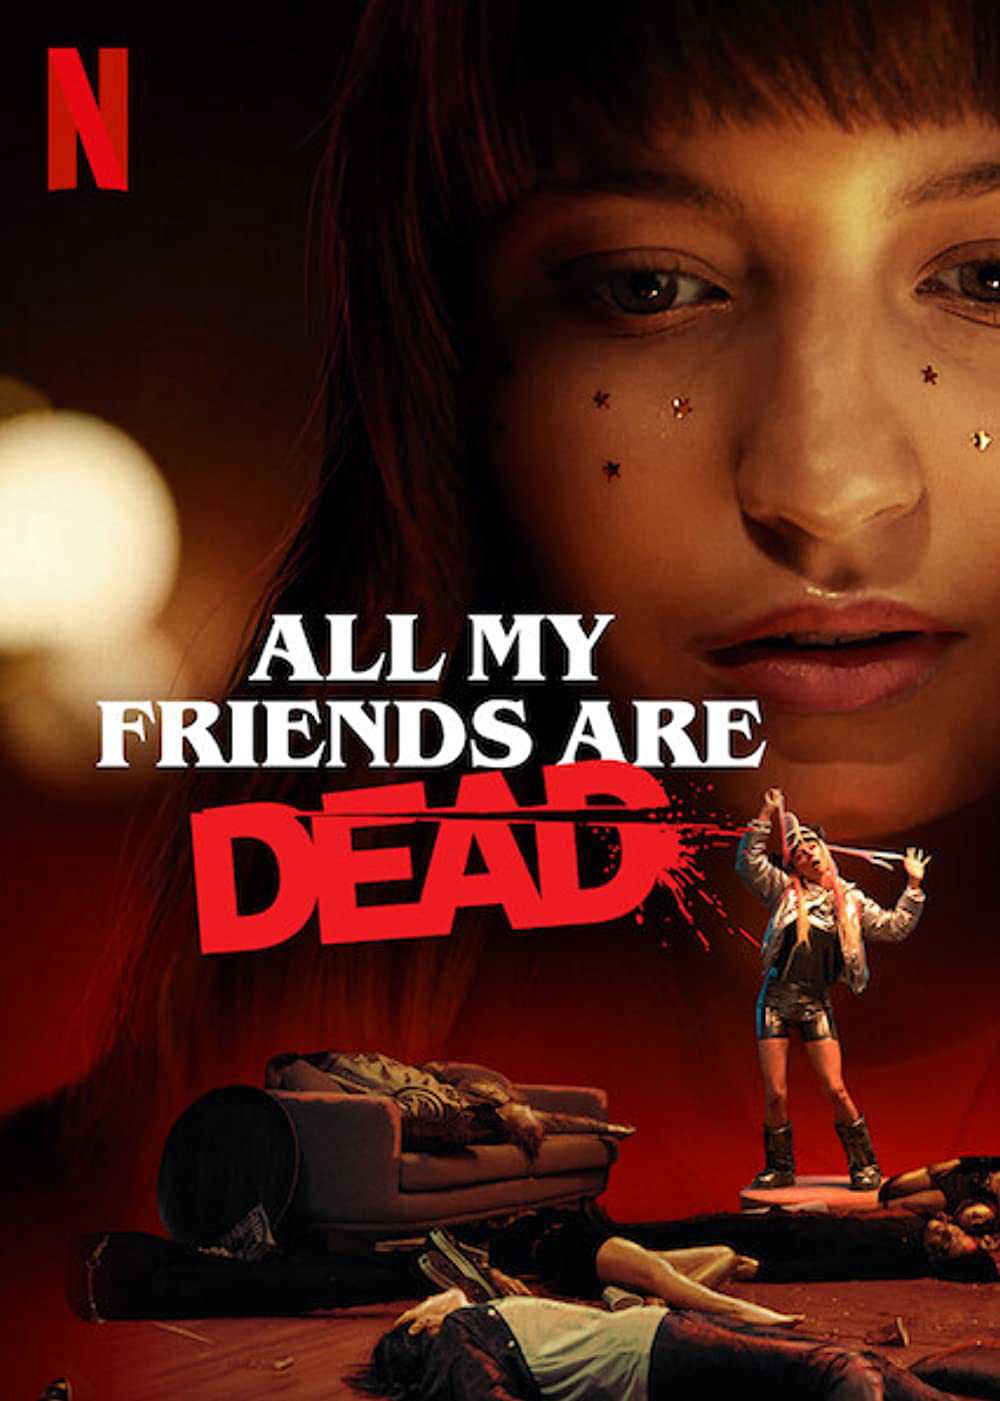 Bạn tôi chết cả rồi - All my friends are dead